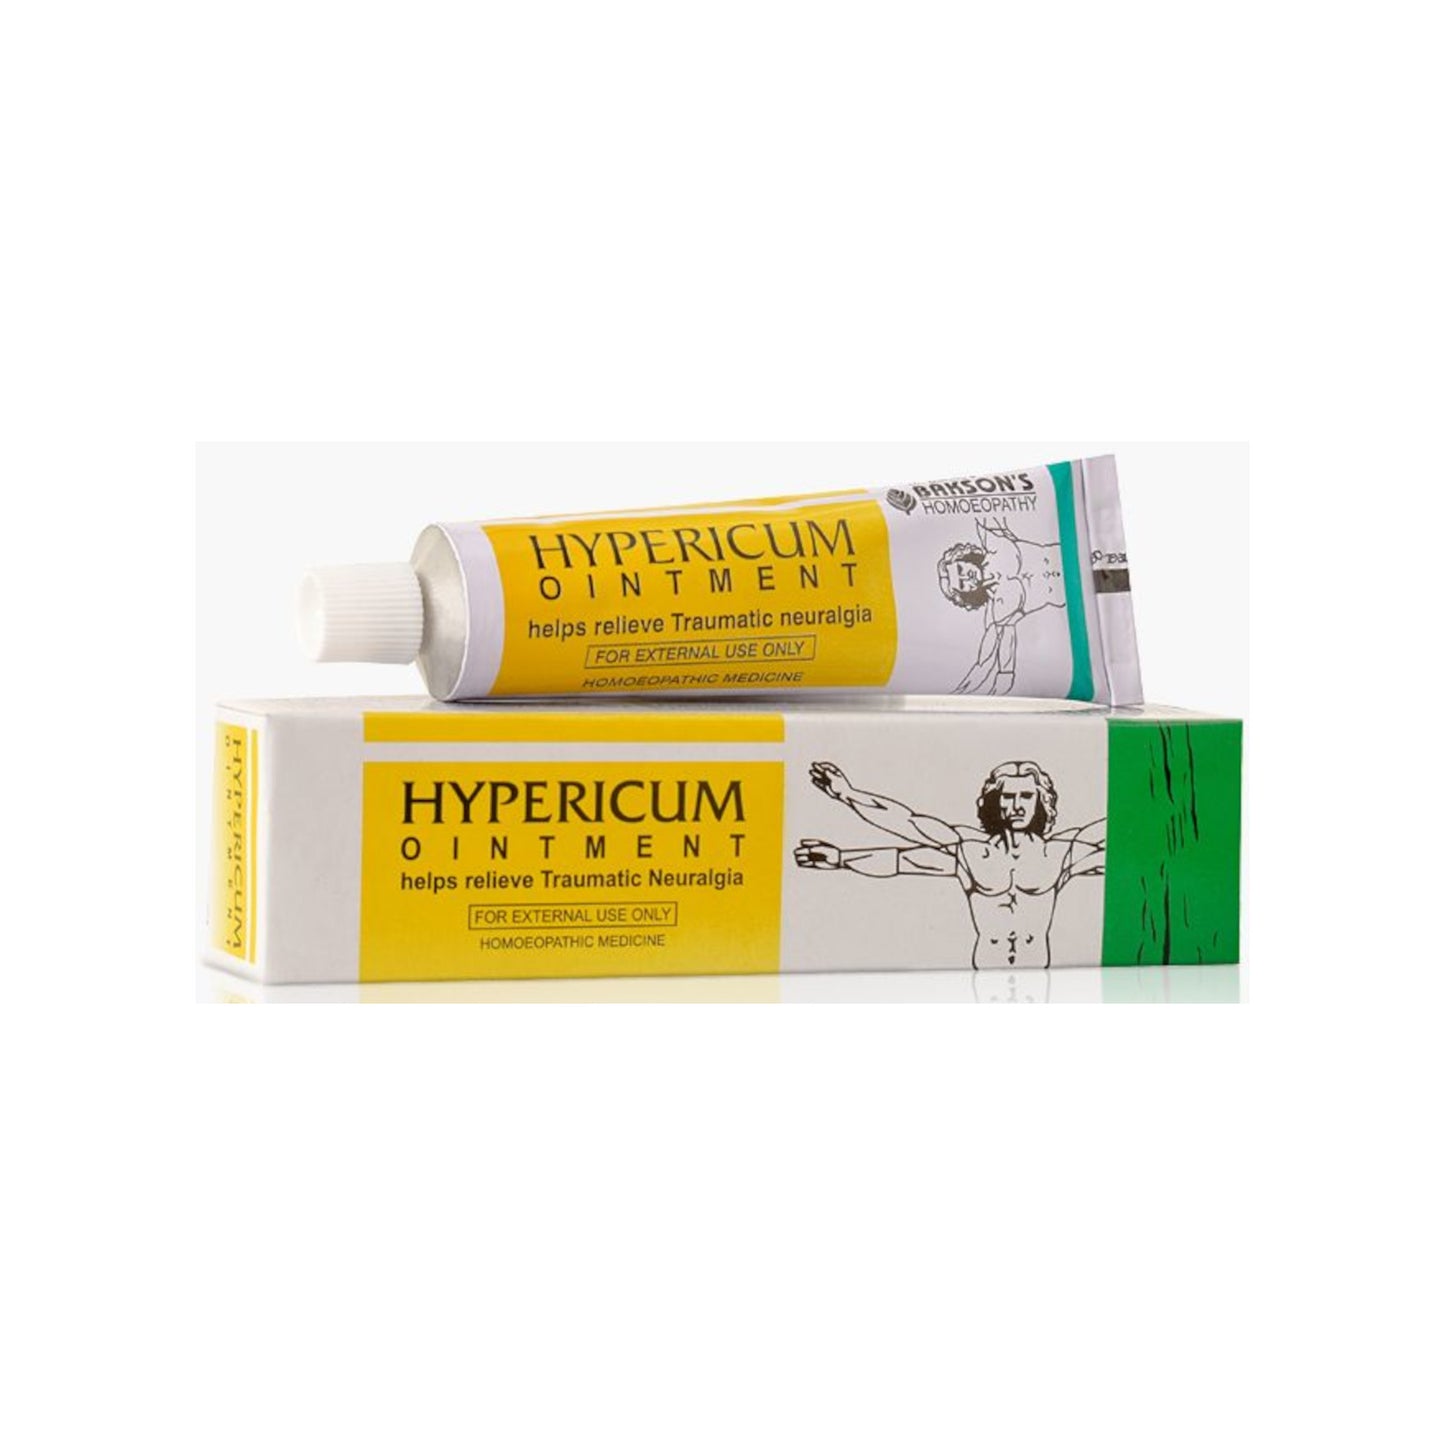 Bakson's Homeopathy - Hypericum Ointment 25 g